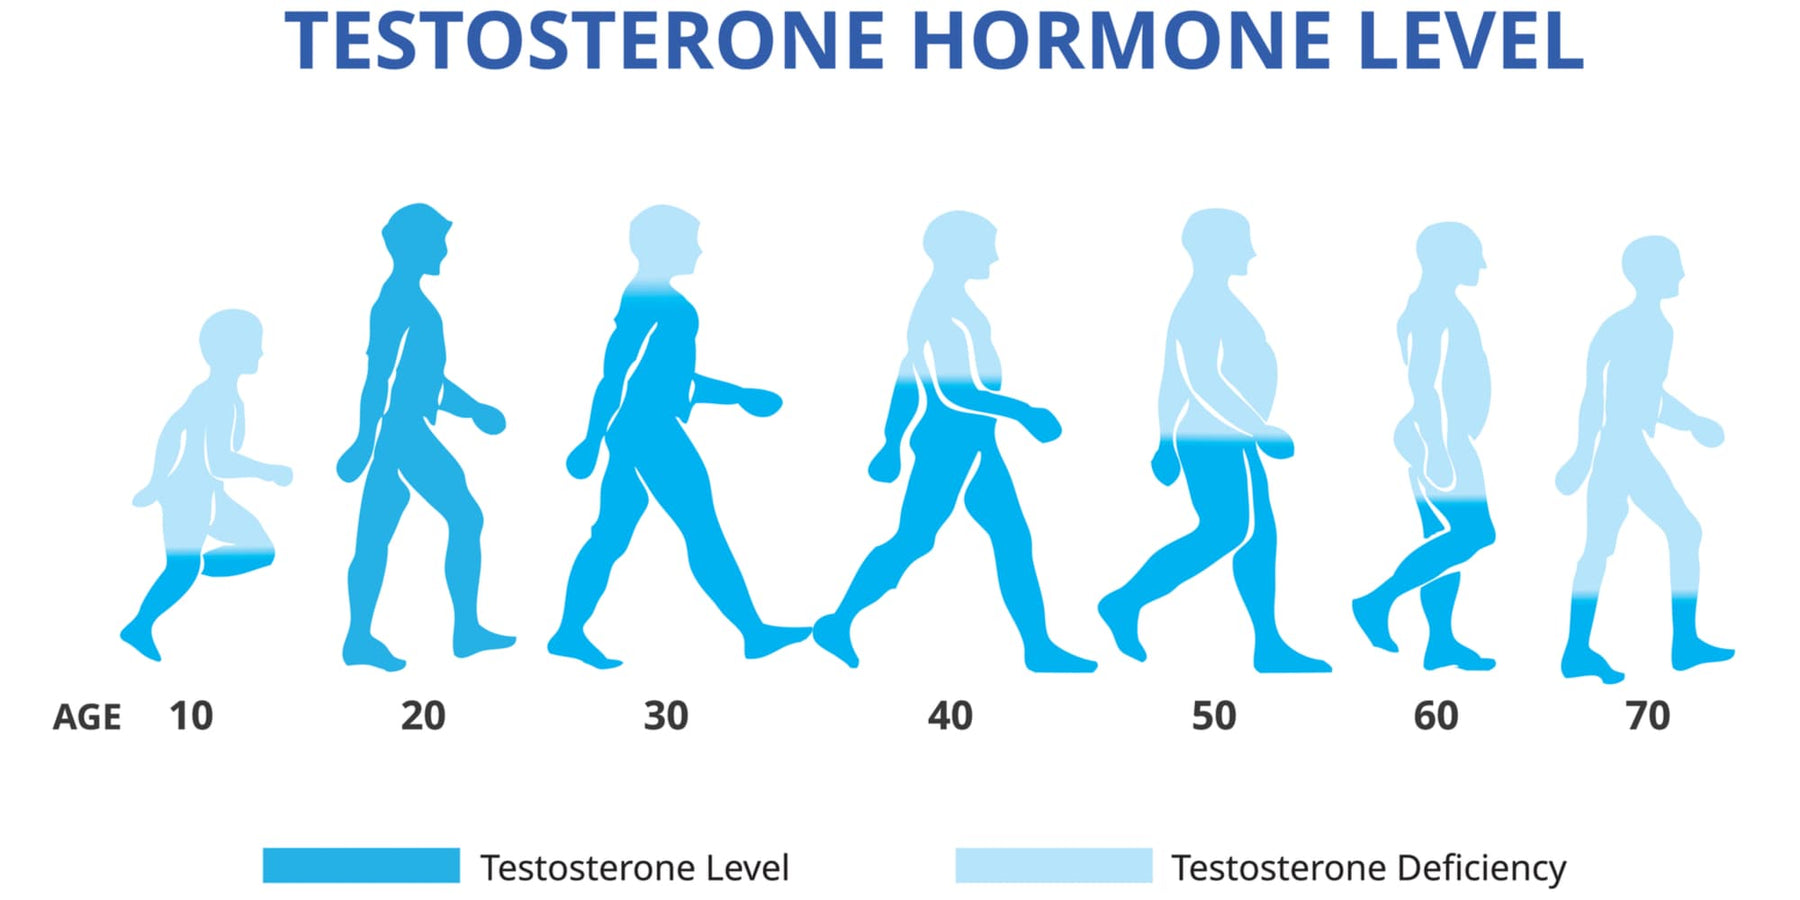 Maneras naturales para estimular la testosterona